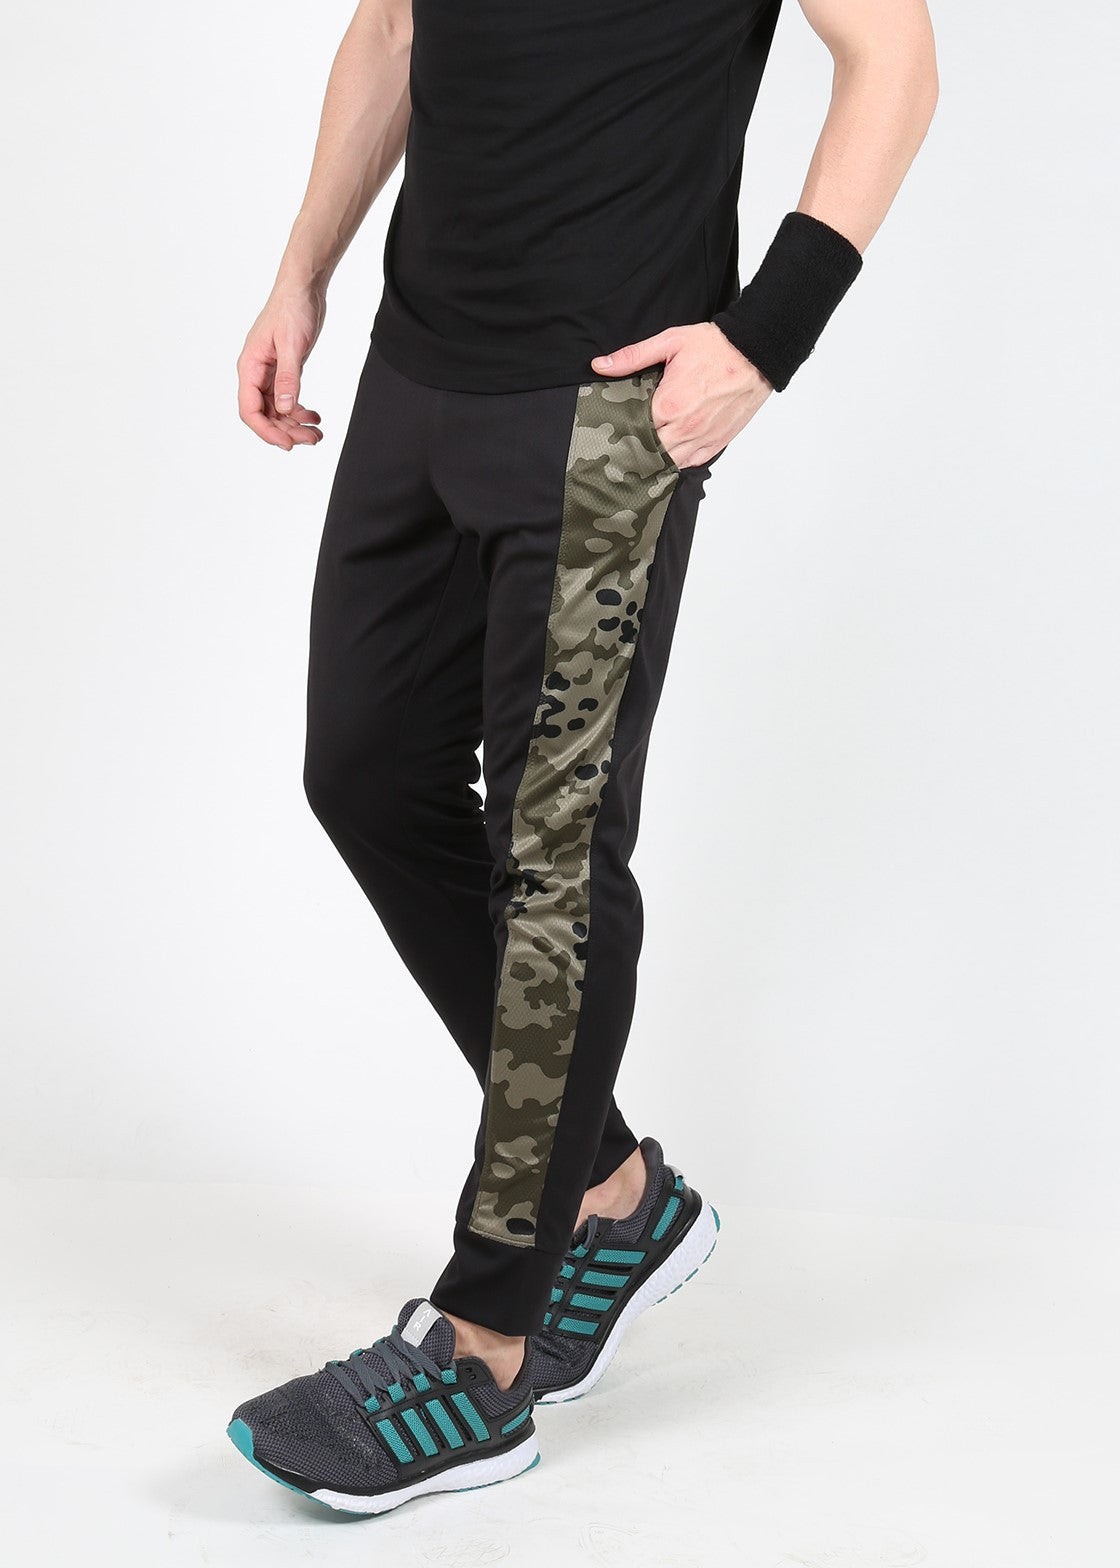 Army West Point Pants, Army Black Knights Sweatpants, Leggings |  shop.goarmysports.com